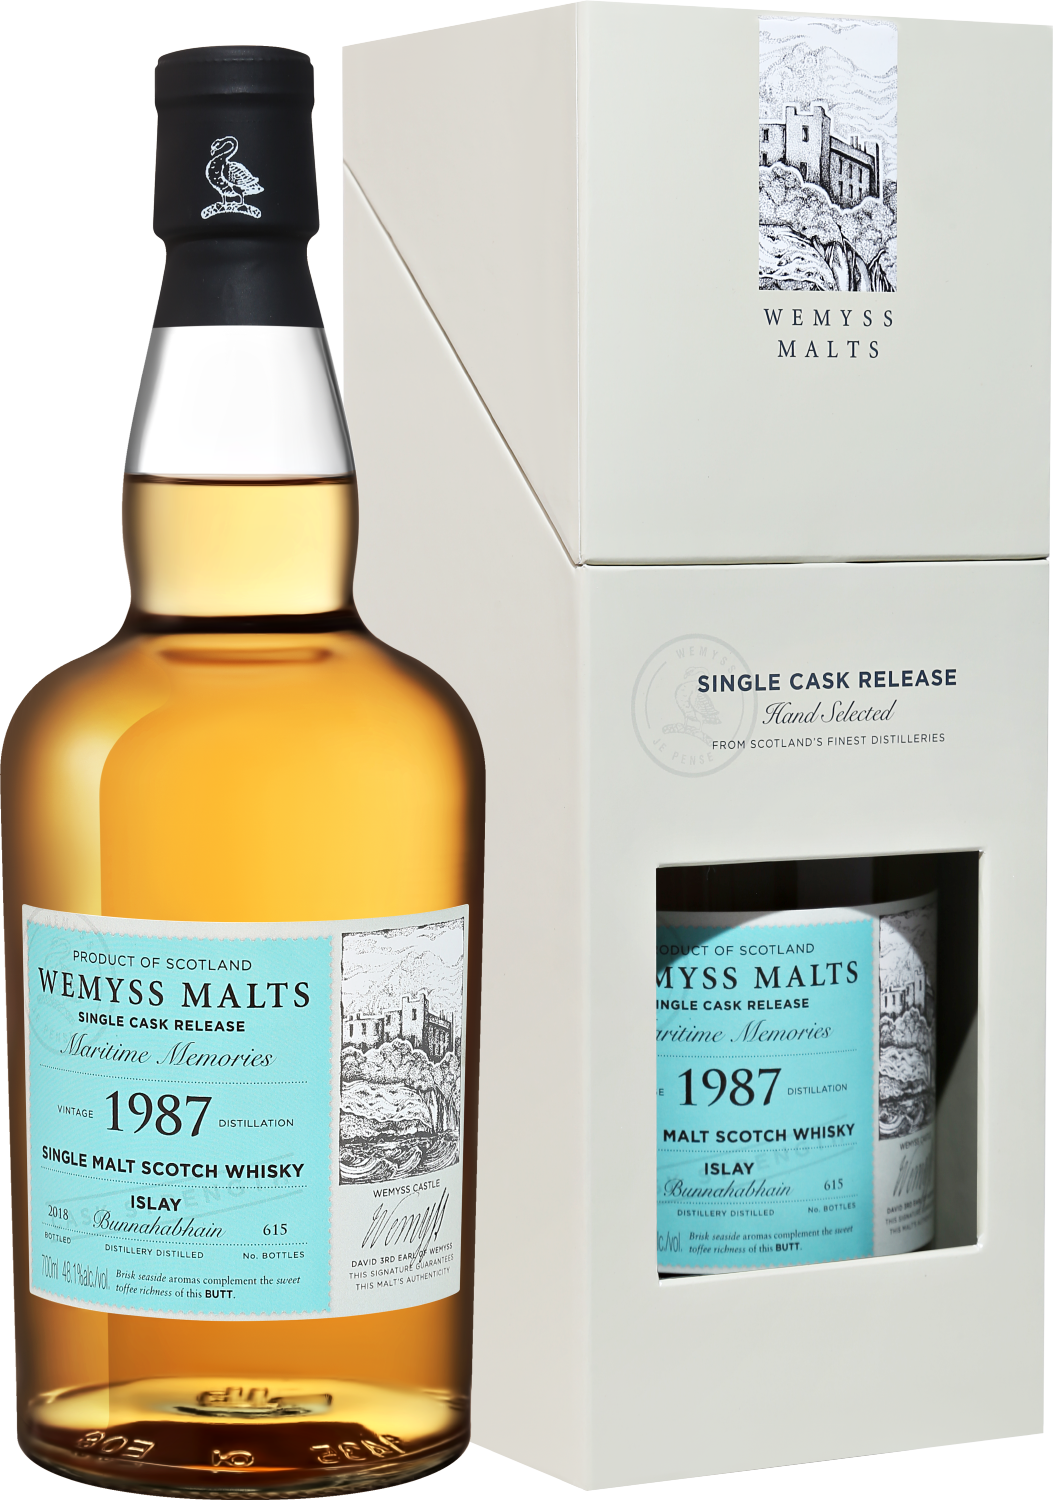 Wemyss Malts Maritime Memories Bunnahabhain 1987 Islay Single Cask Single Malt Scotch Whisky (gift box) bunnahabhain islay single malt scotch whisky 12 y o gift box